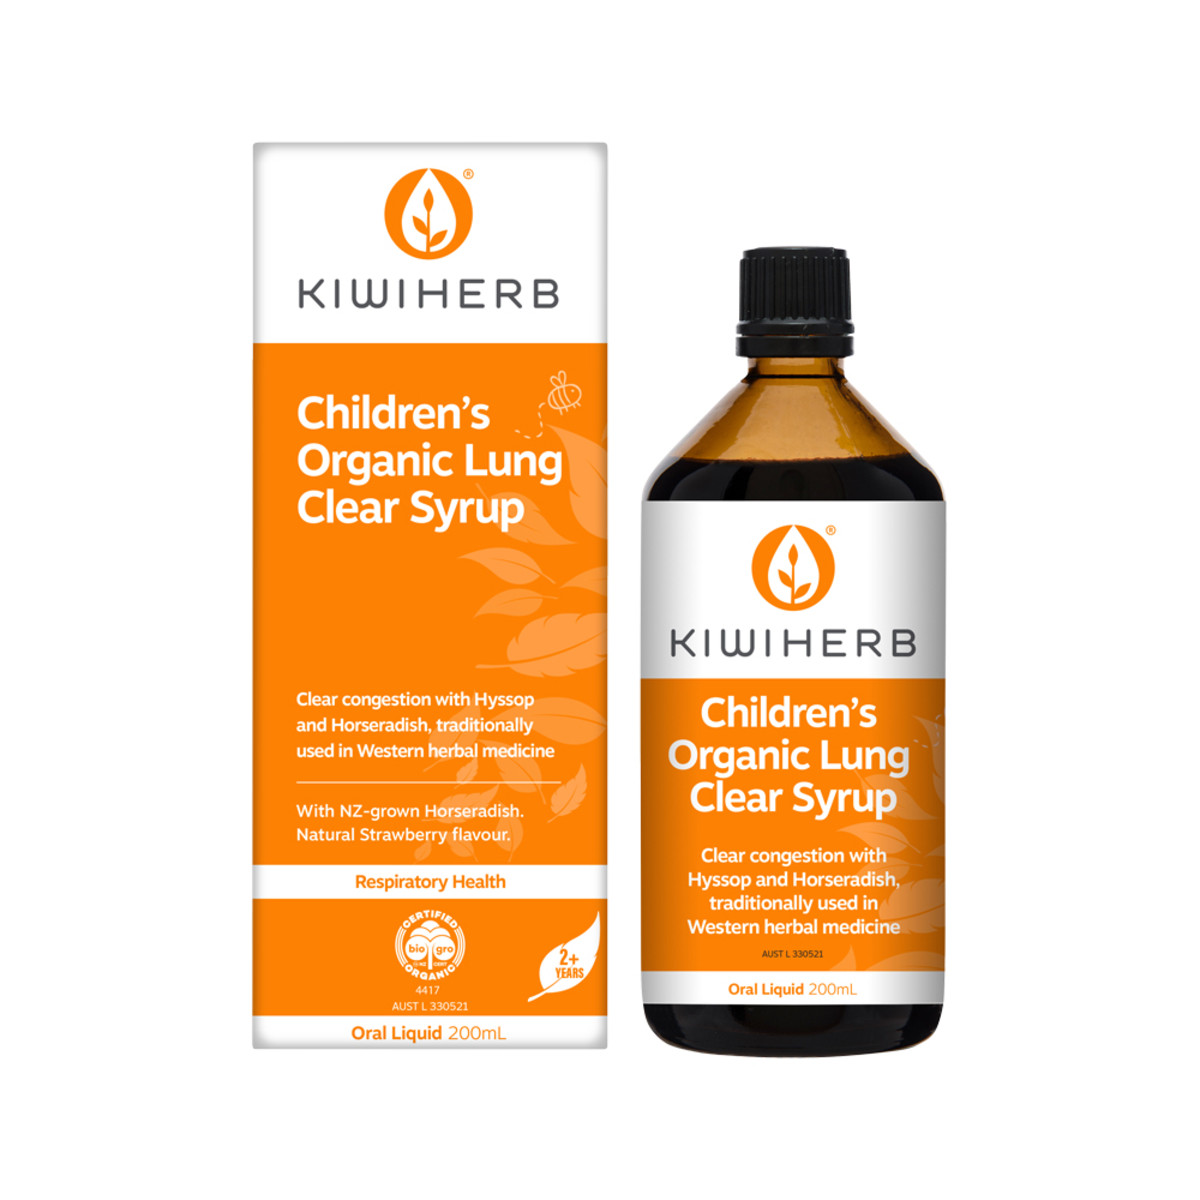 KiwiHerb Children's Organic Lung Clear Syrup